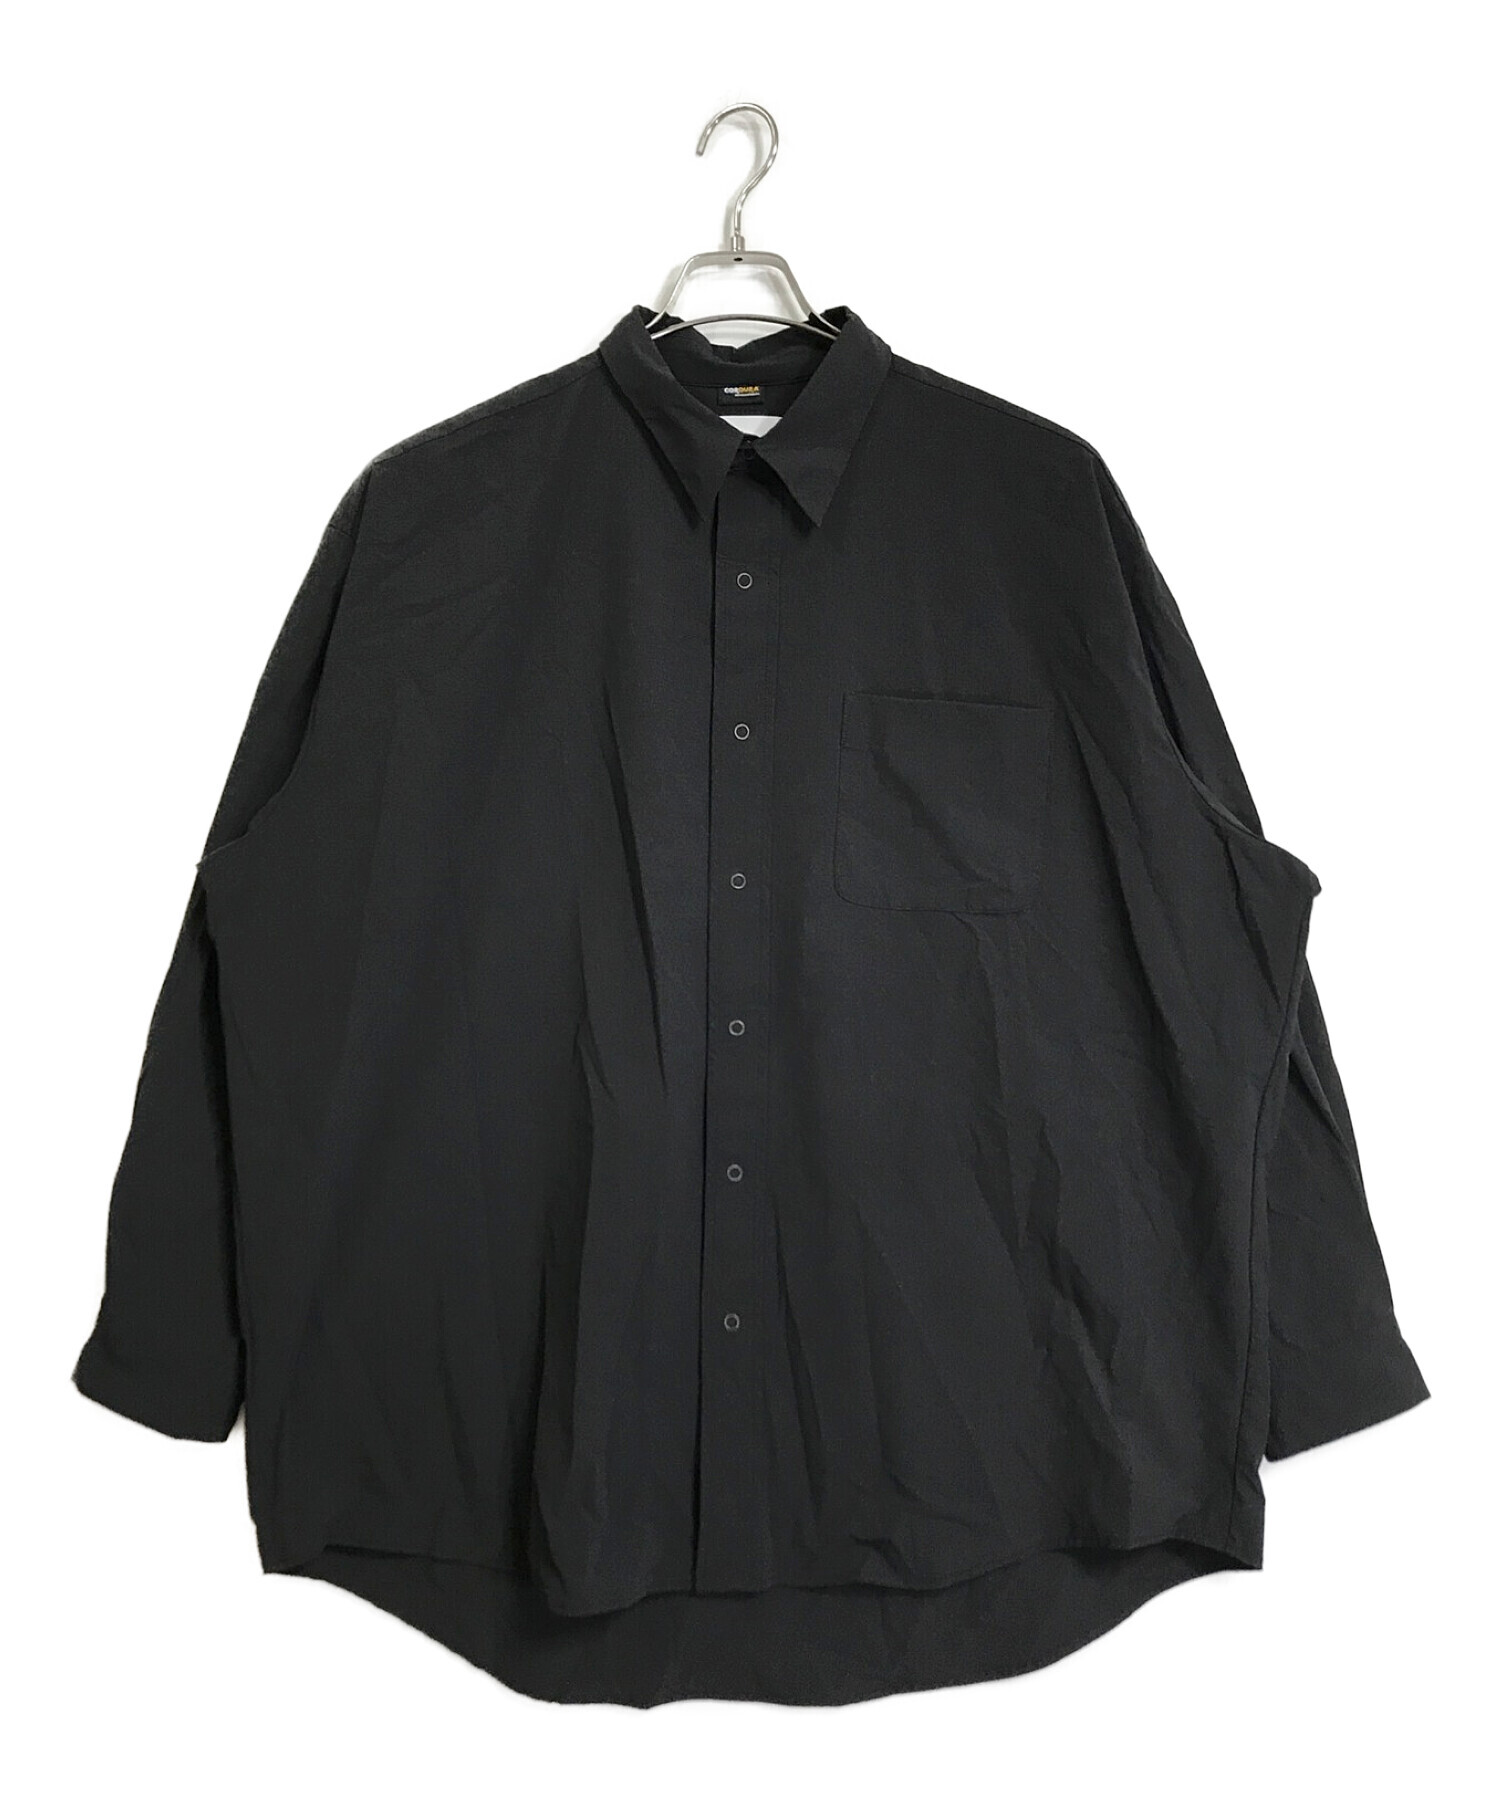 workahoLC (ワーカホリック) コーデュラリップストップオーバーシャツ ブラック サイズ:XL